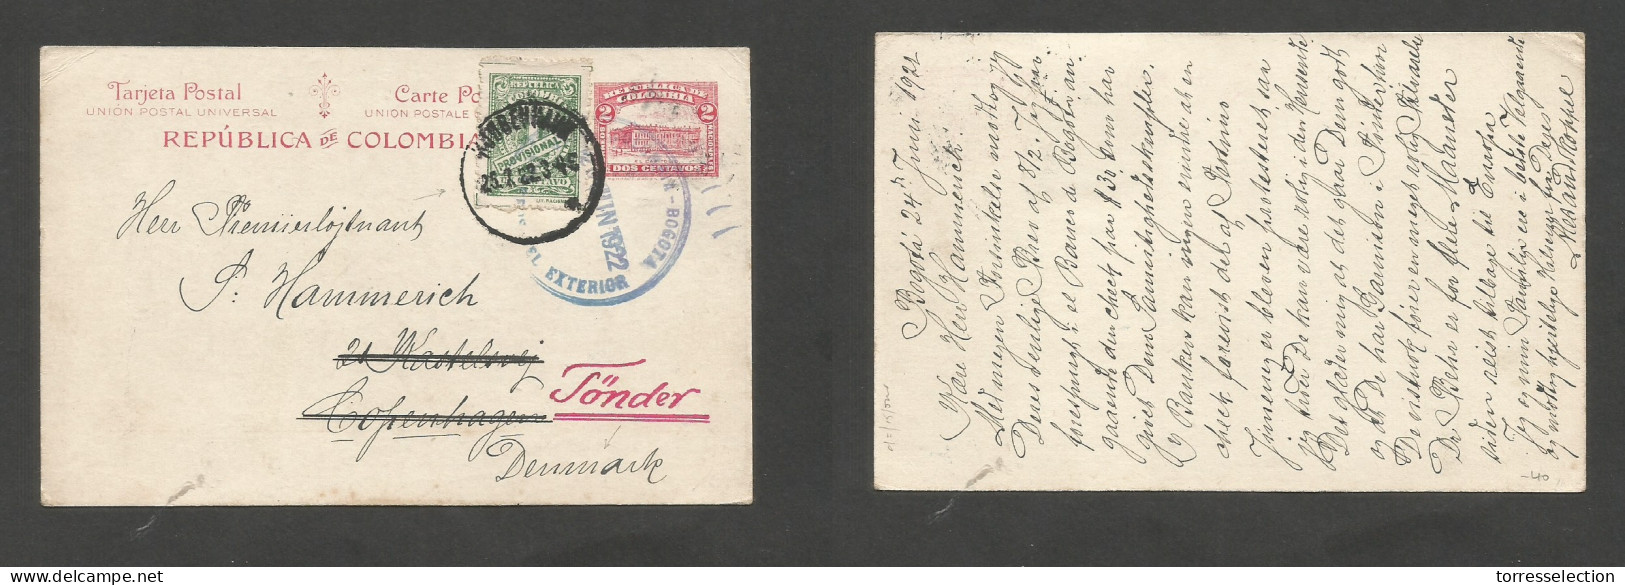 COLOMBIA. 1922 (June 24) Bogota - Denmark, Tonder (25 July) 2c Red Stat Card + Adtl, Tied Depart Cds + Danish PO Dest +. - Colombia